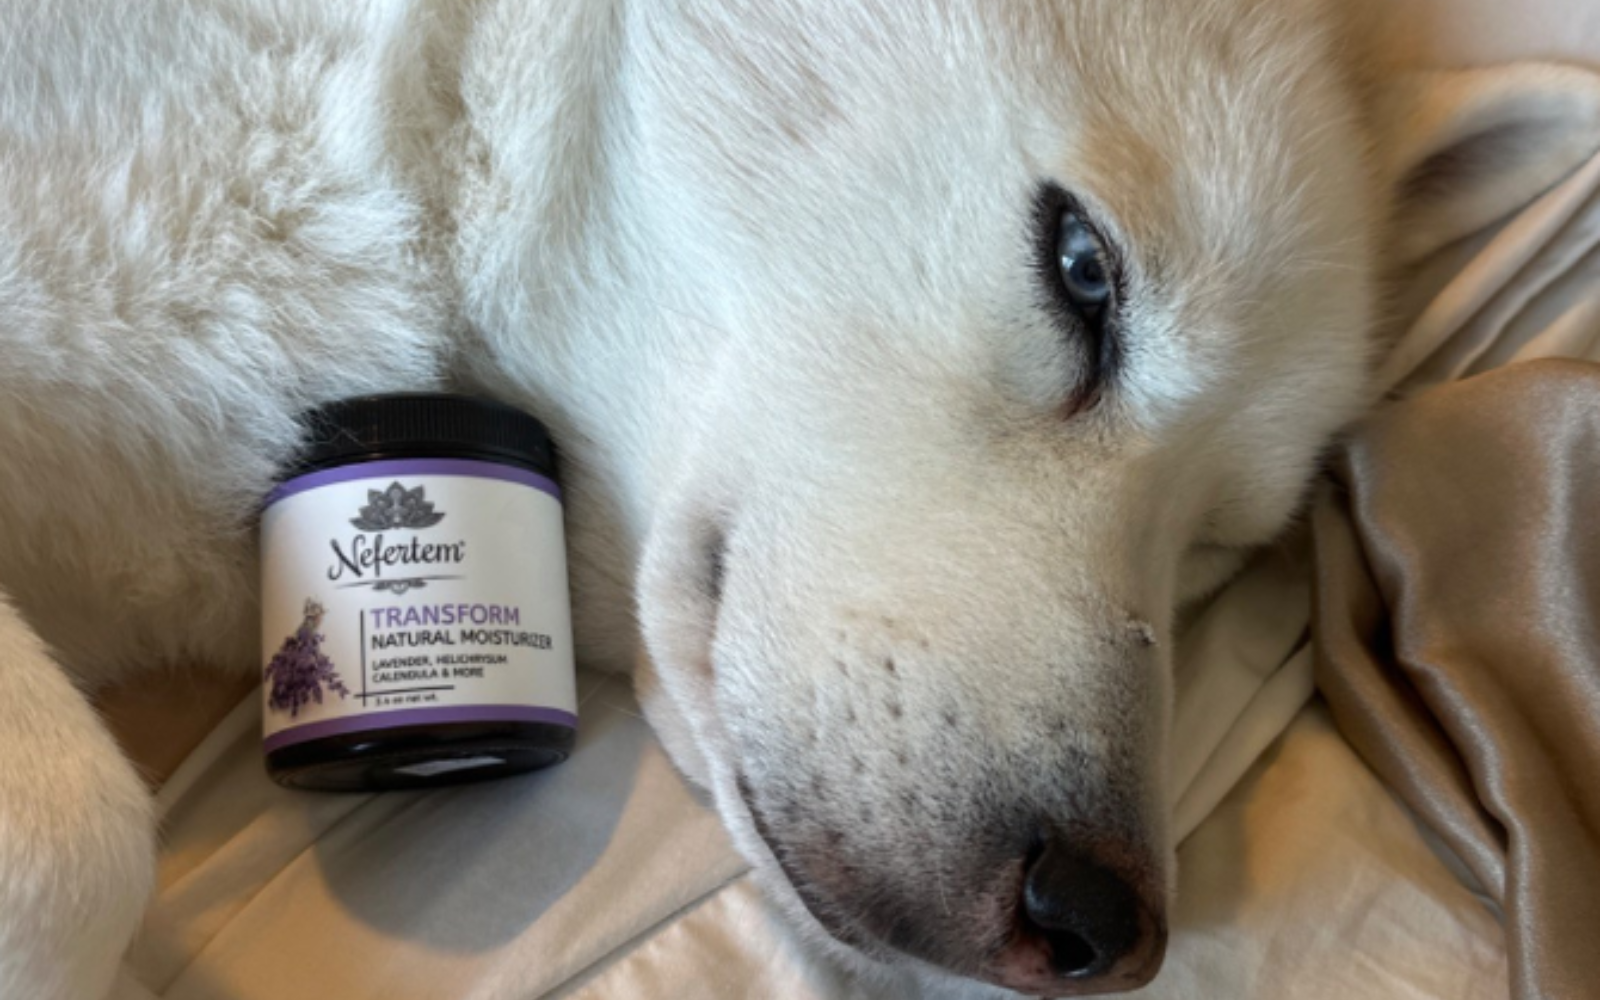 dog with jar of tallow skincare moisturizer